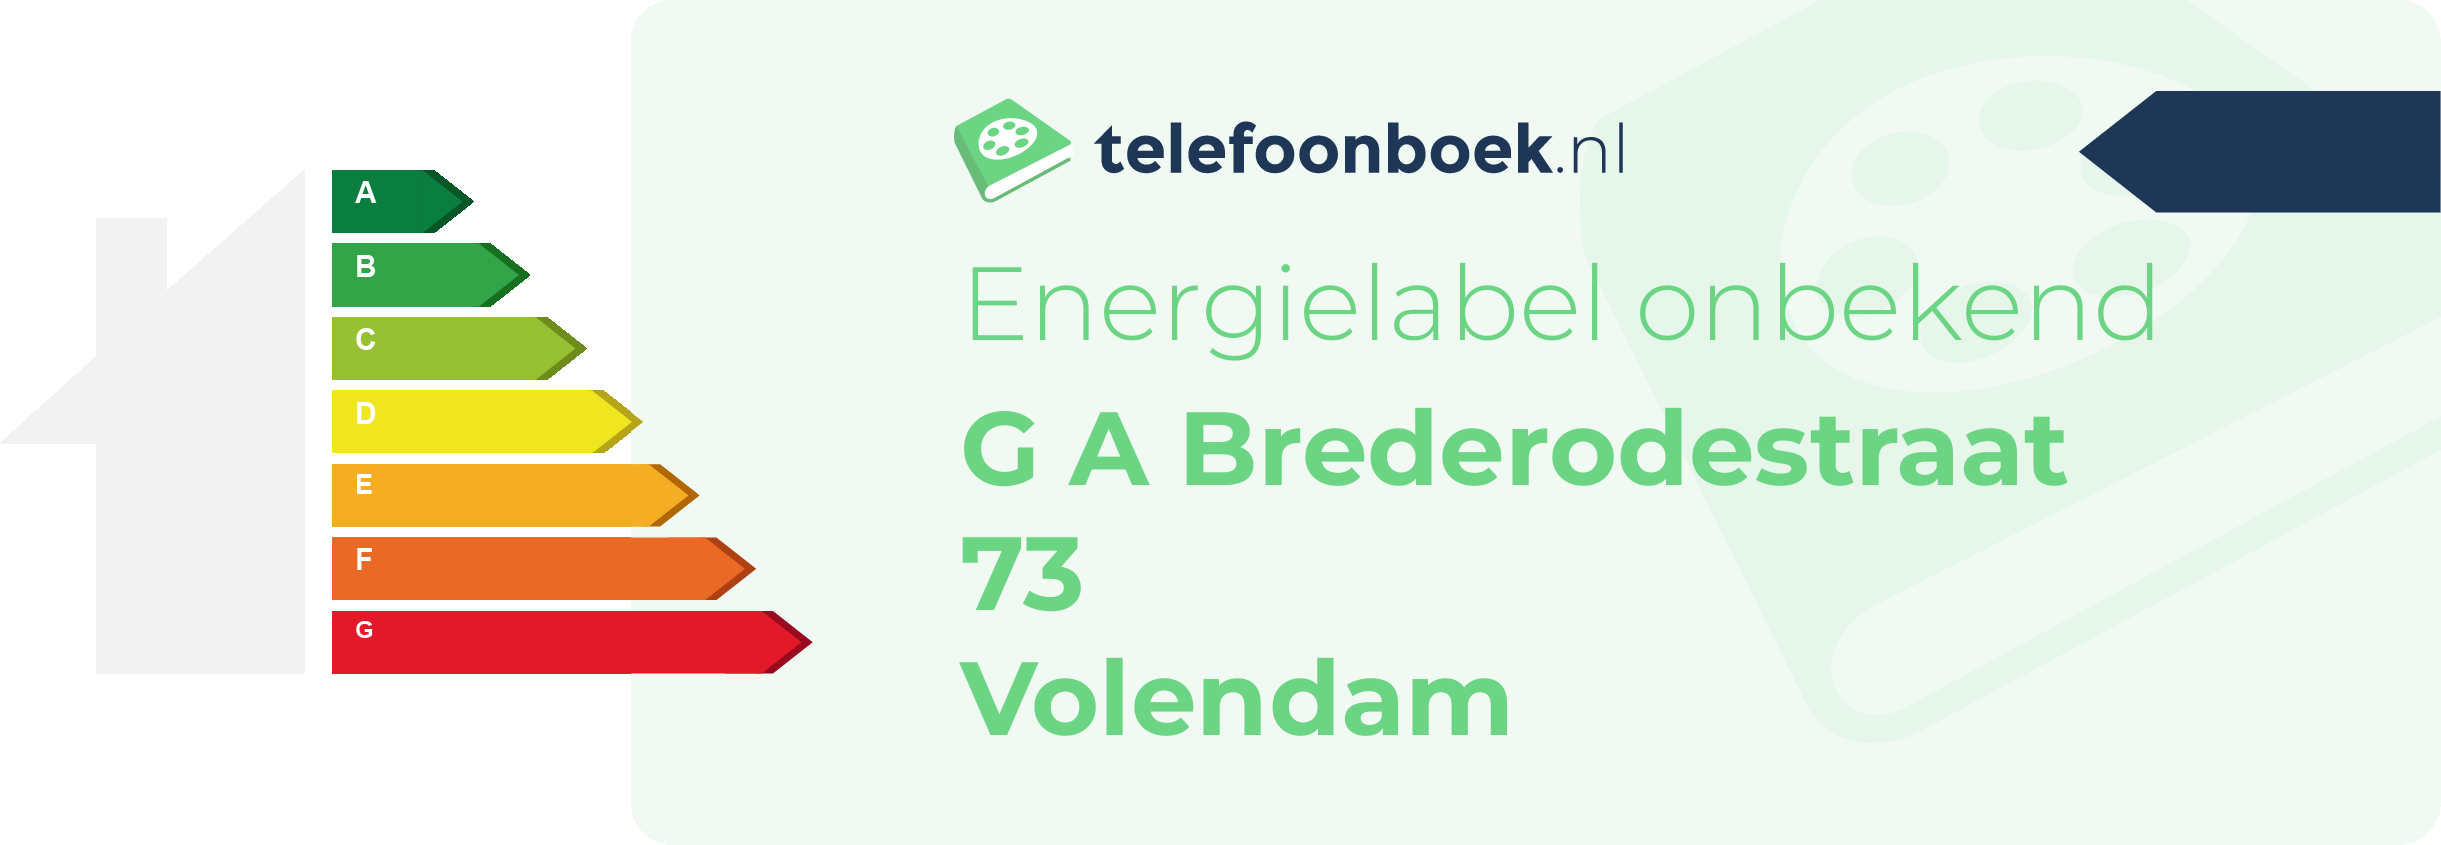 Energielabel G A Brederodestraat 73 Volendam